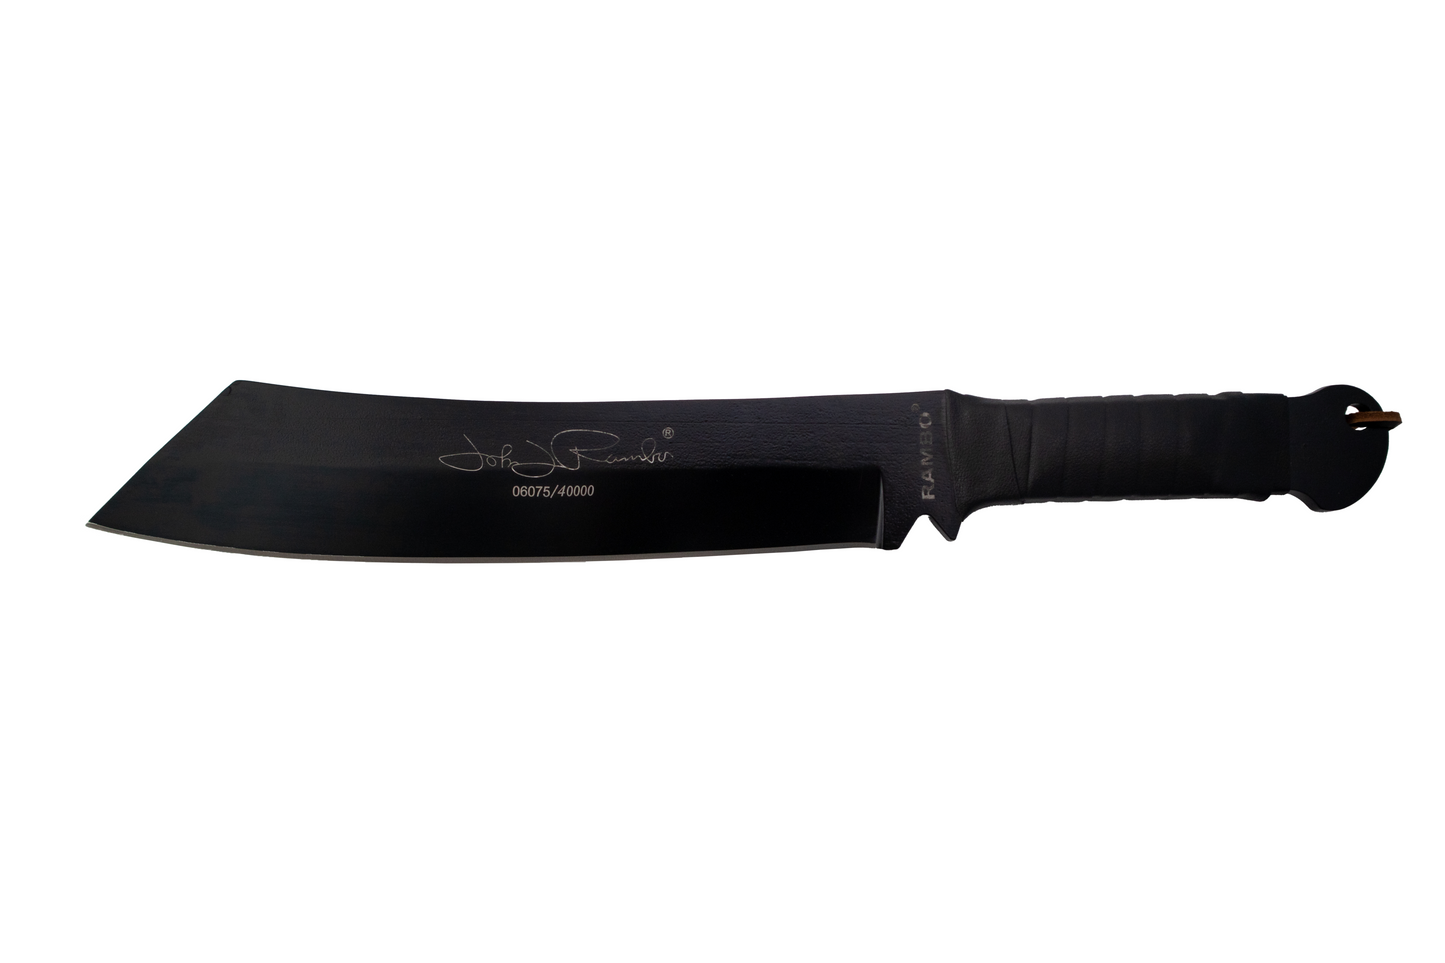 RAMBO PART IV MACHETE KNIFE SIGNATURE EDITION HUNTING KNIFE WITH LEATHER SHEATH